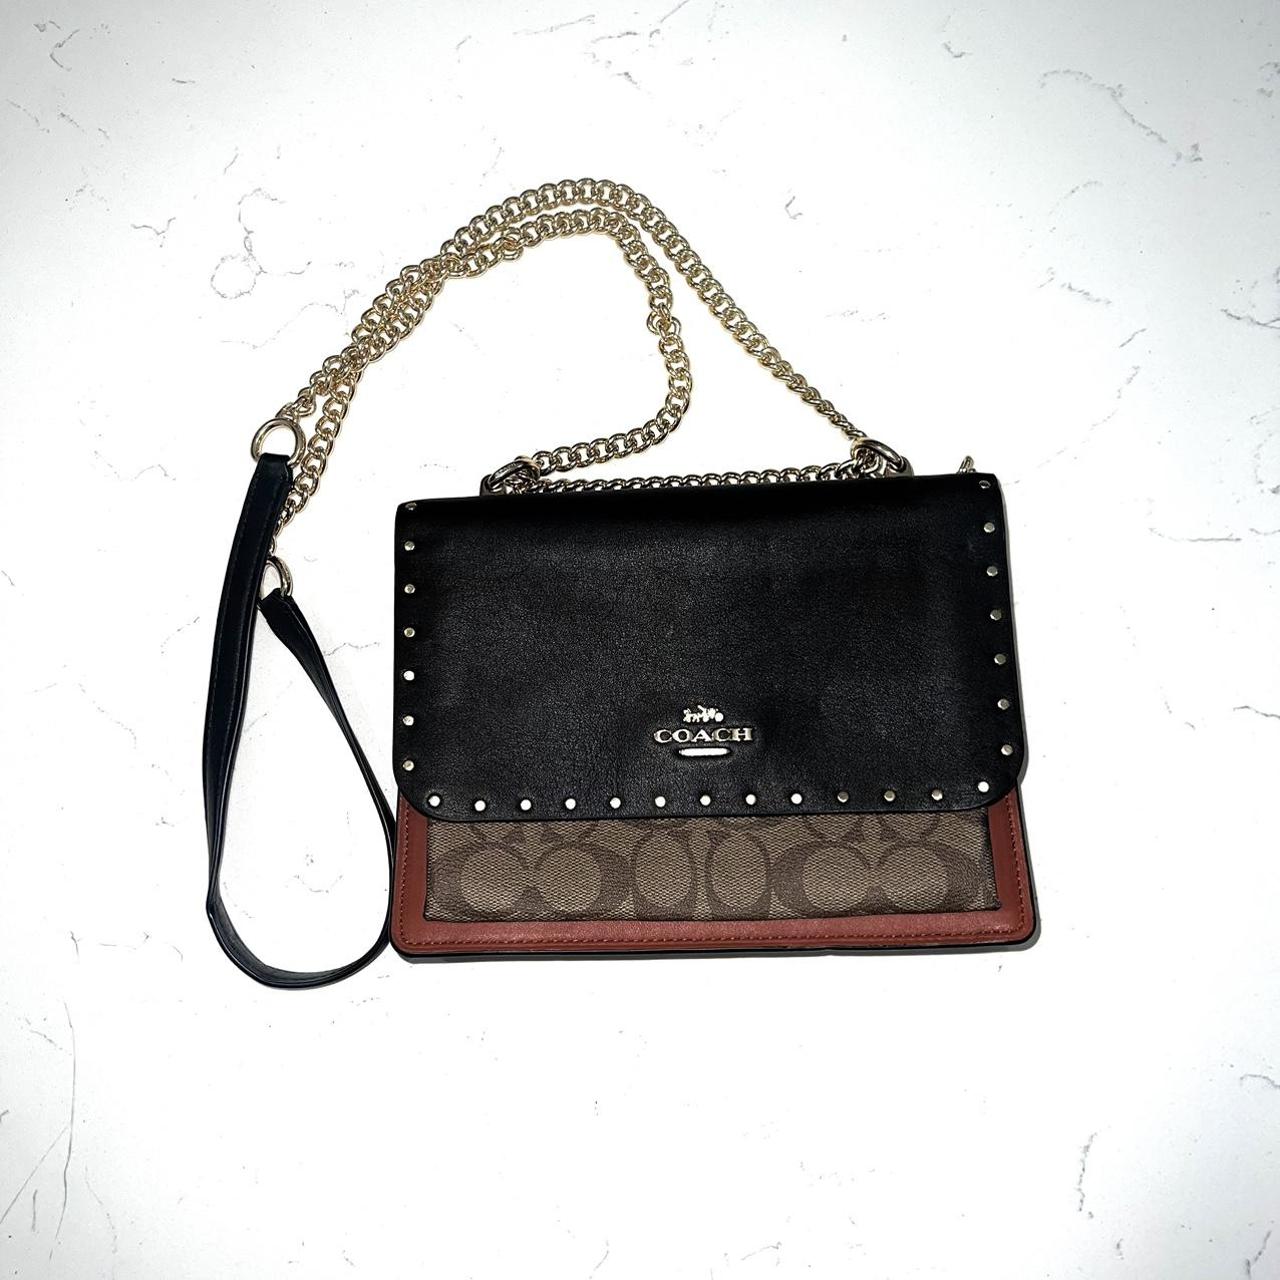 Coach Bag Outlet or Retail? : r/handbags